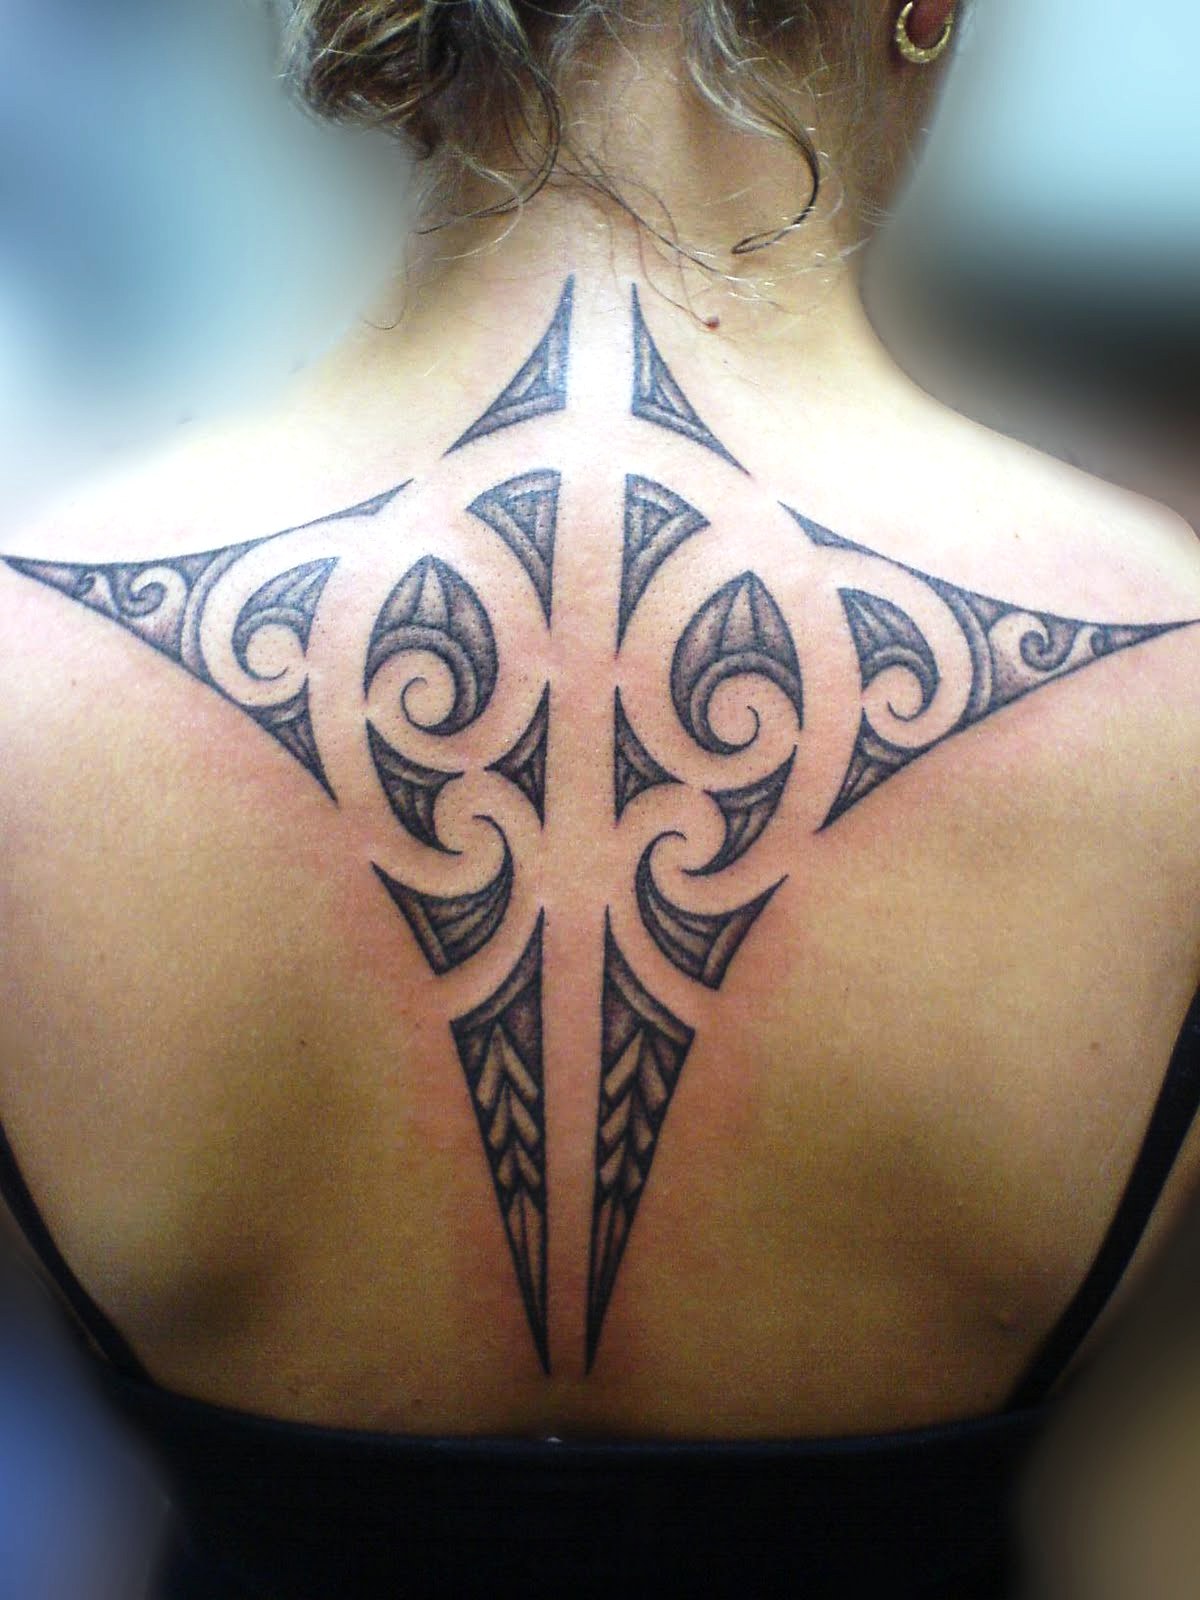 Tattoo-Designs-for-Women-